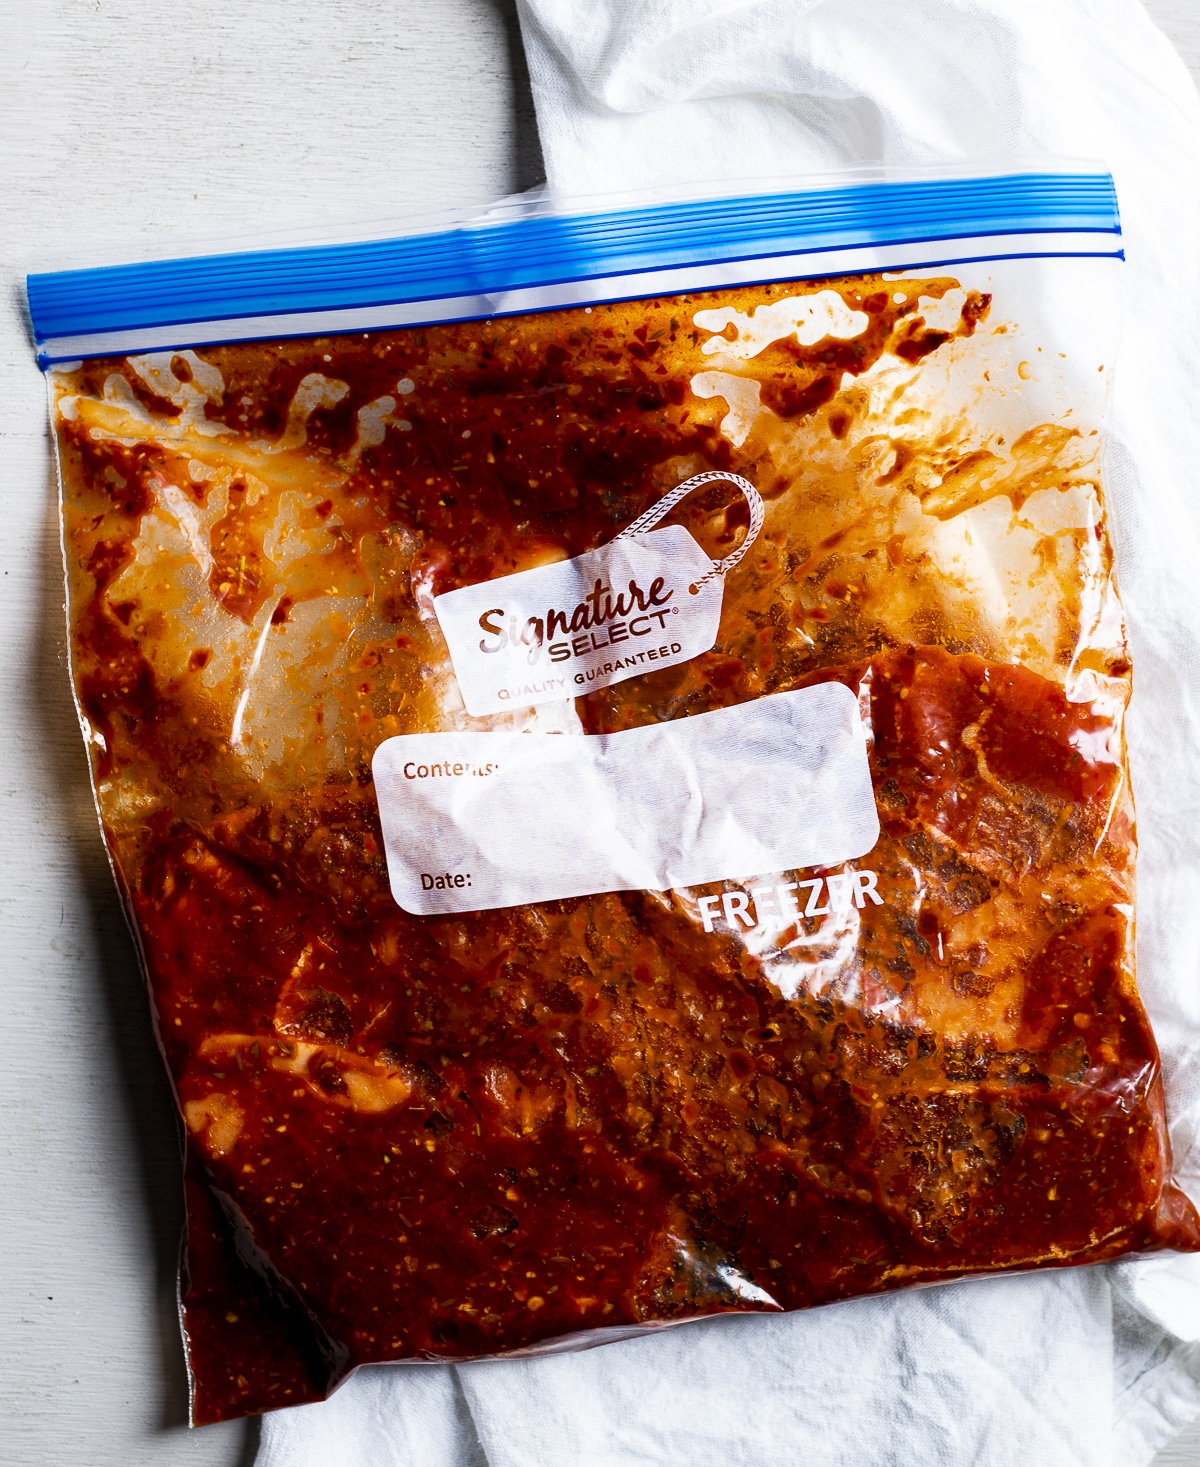 Beef shank with marinade in a ziplock bag.